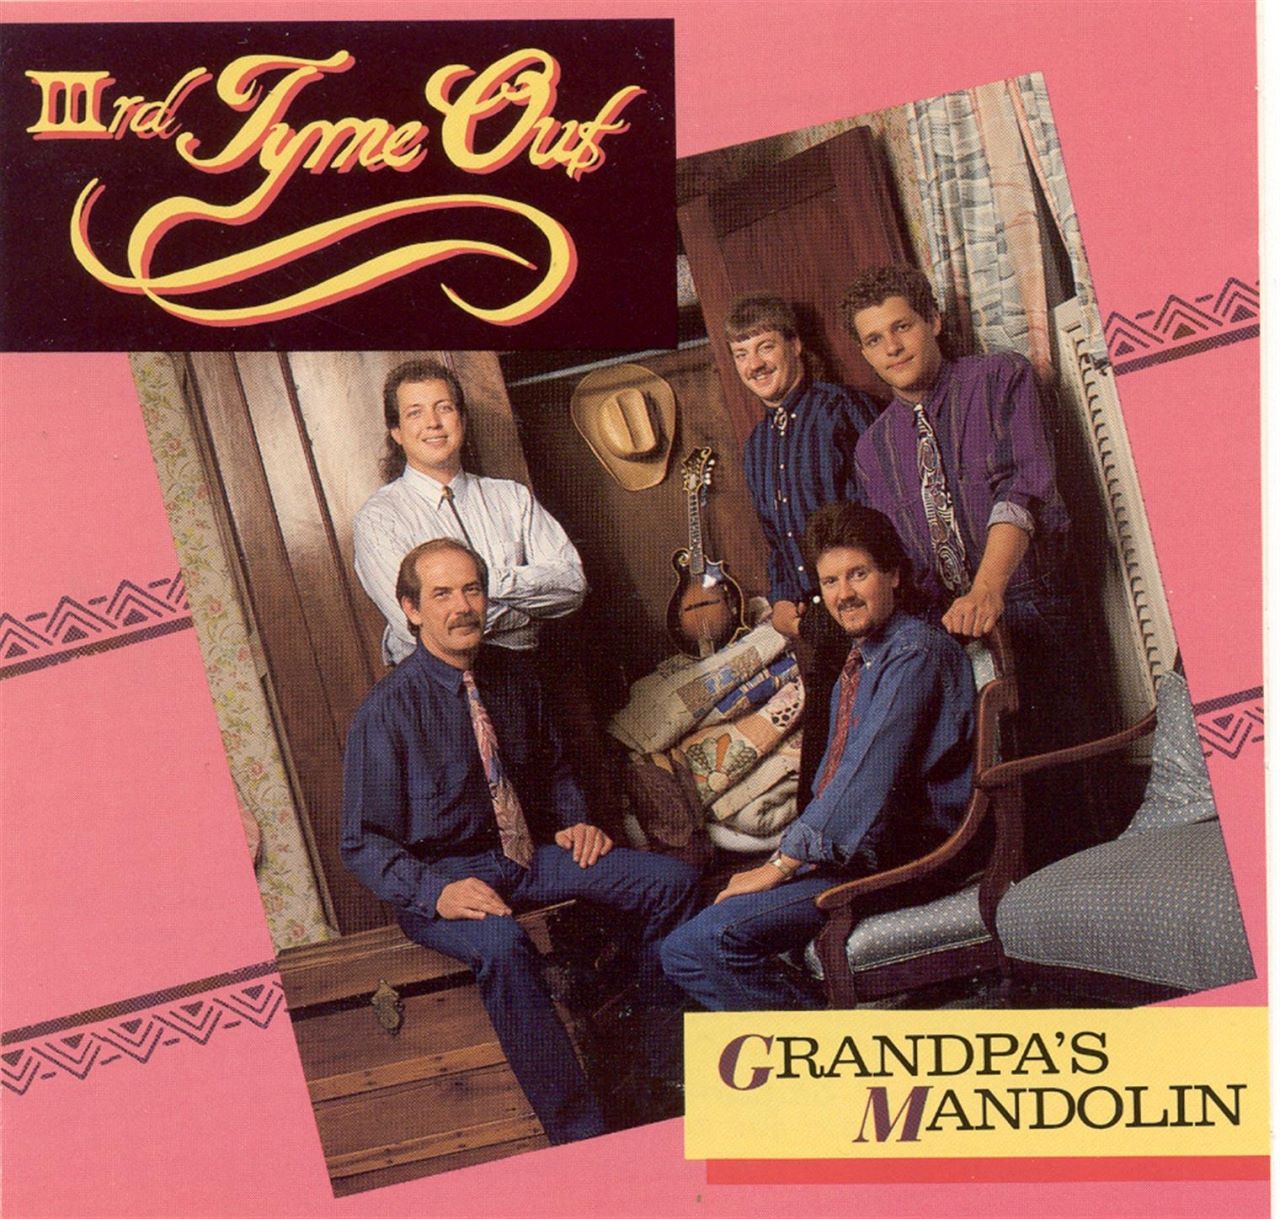 IIIrd Tyme Out - Grandpa's Mandolin cover album